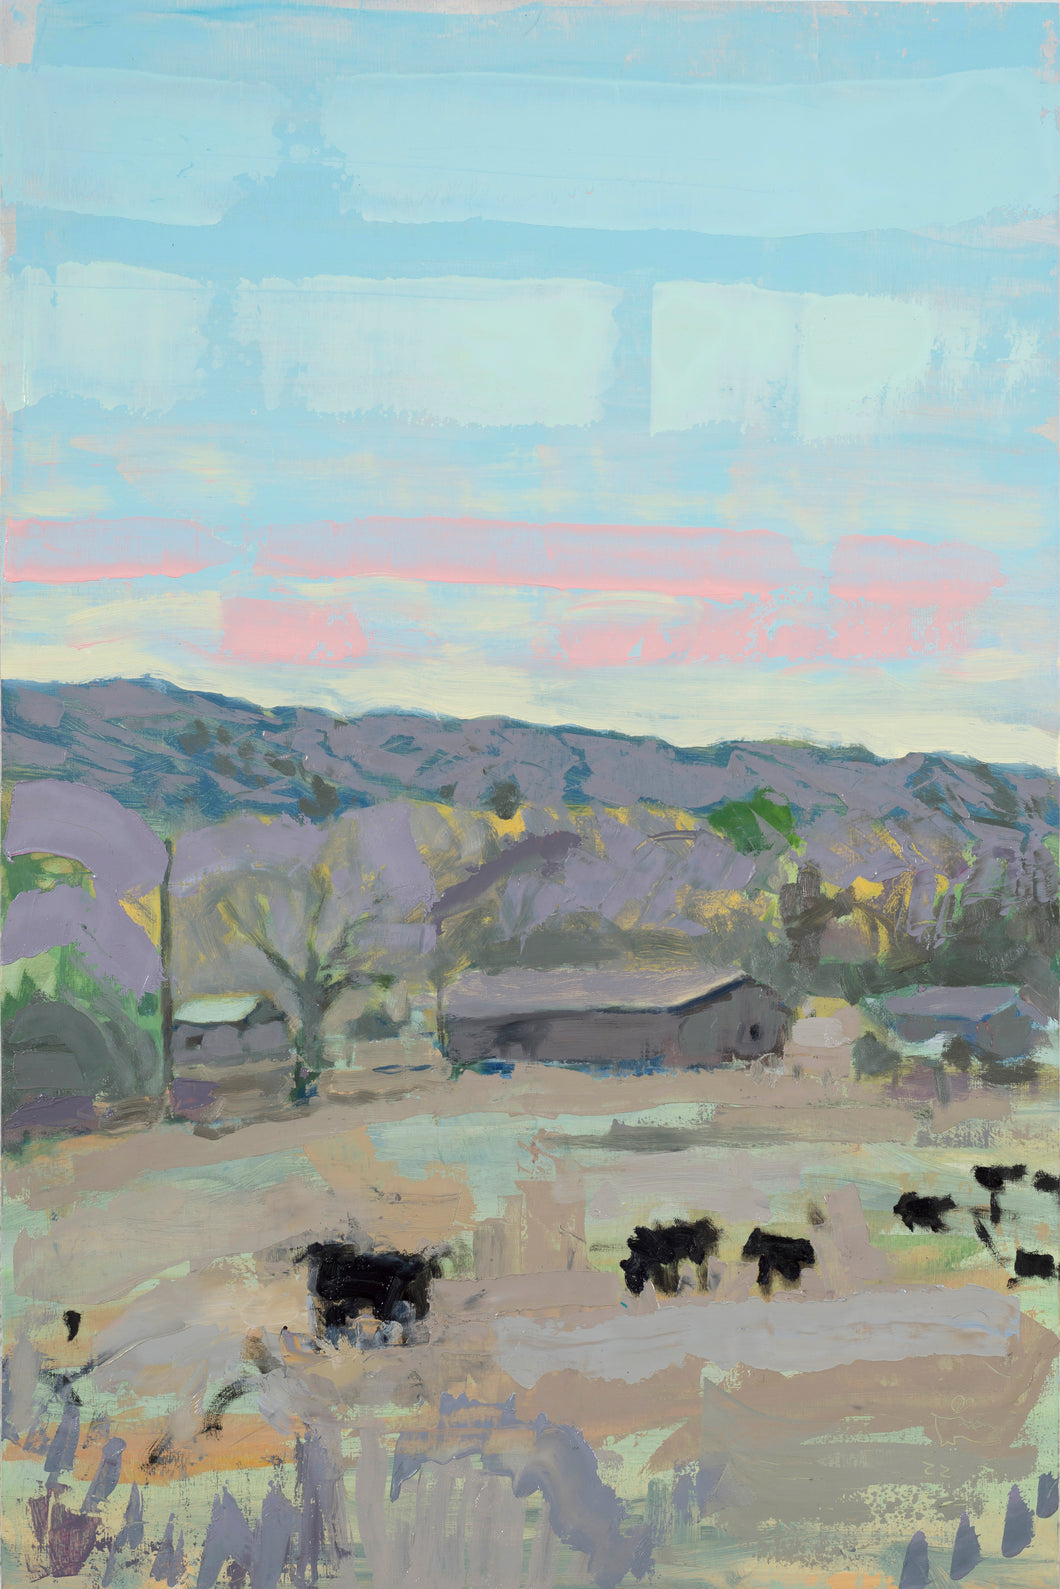 Shawn Demarest - Evening Cow Memory